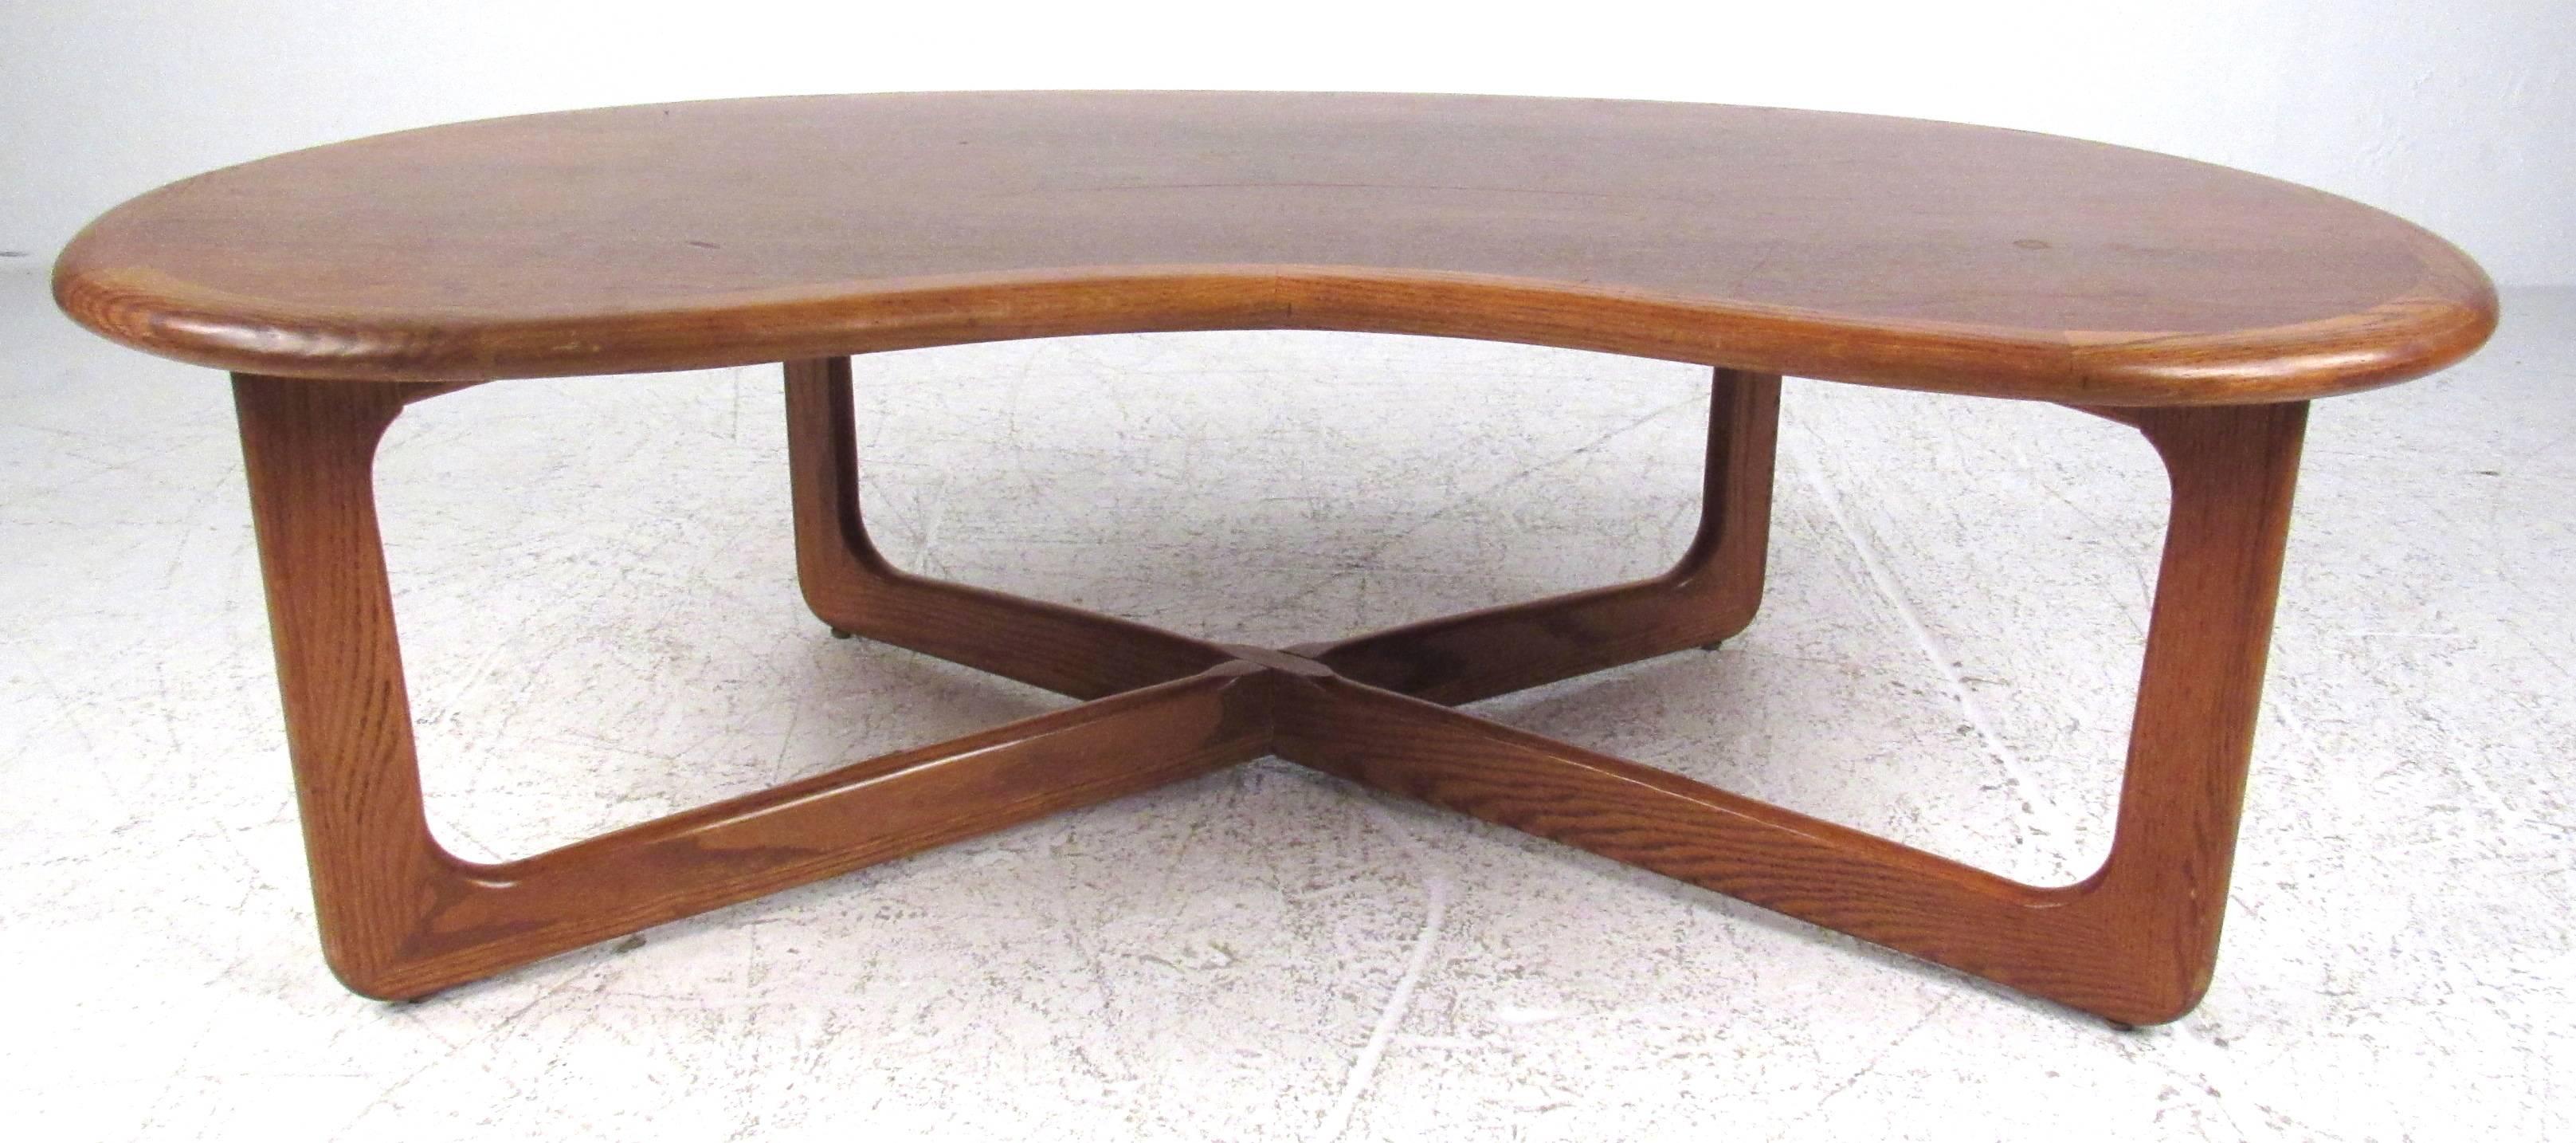 kidney shaped coffee table vintage